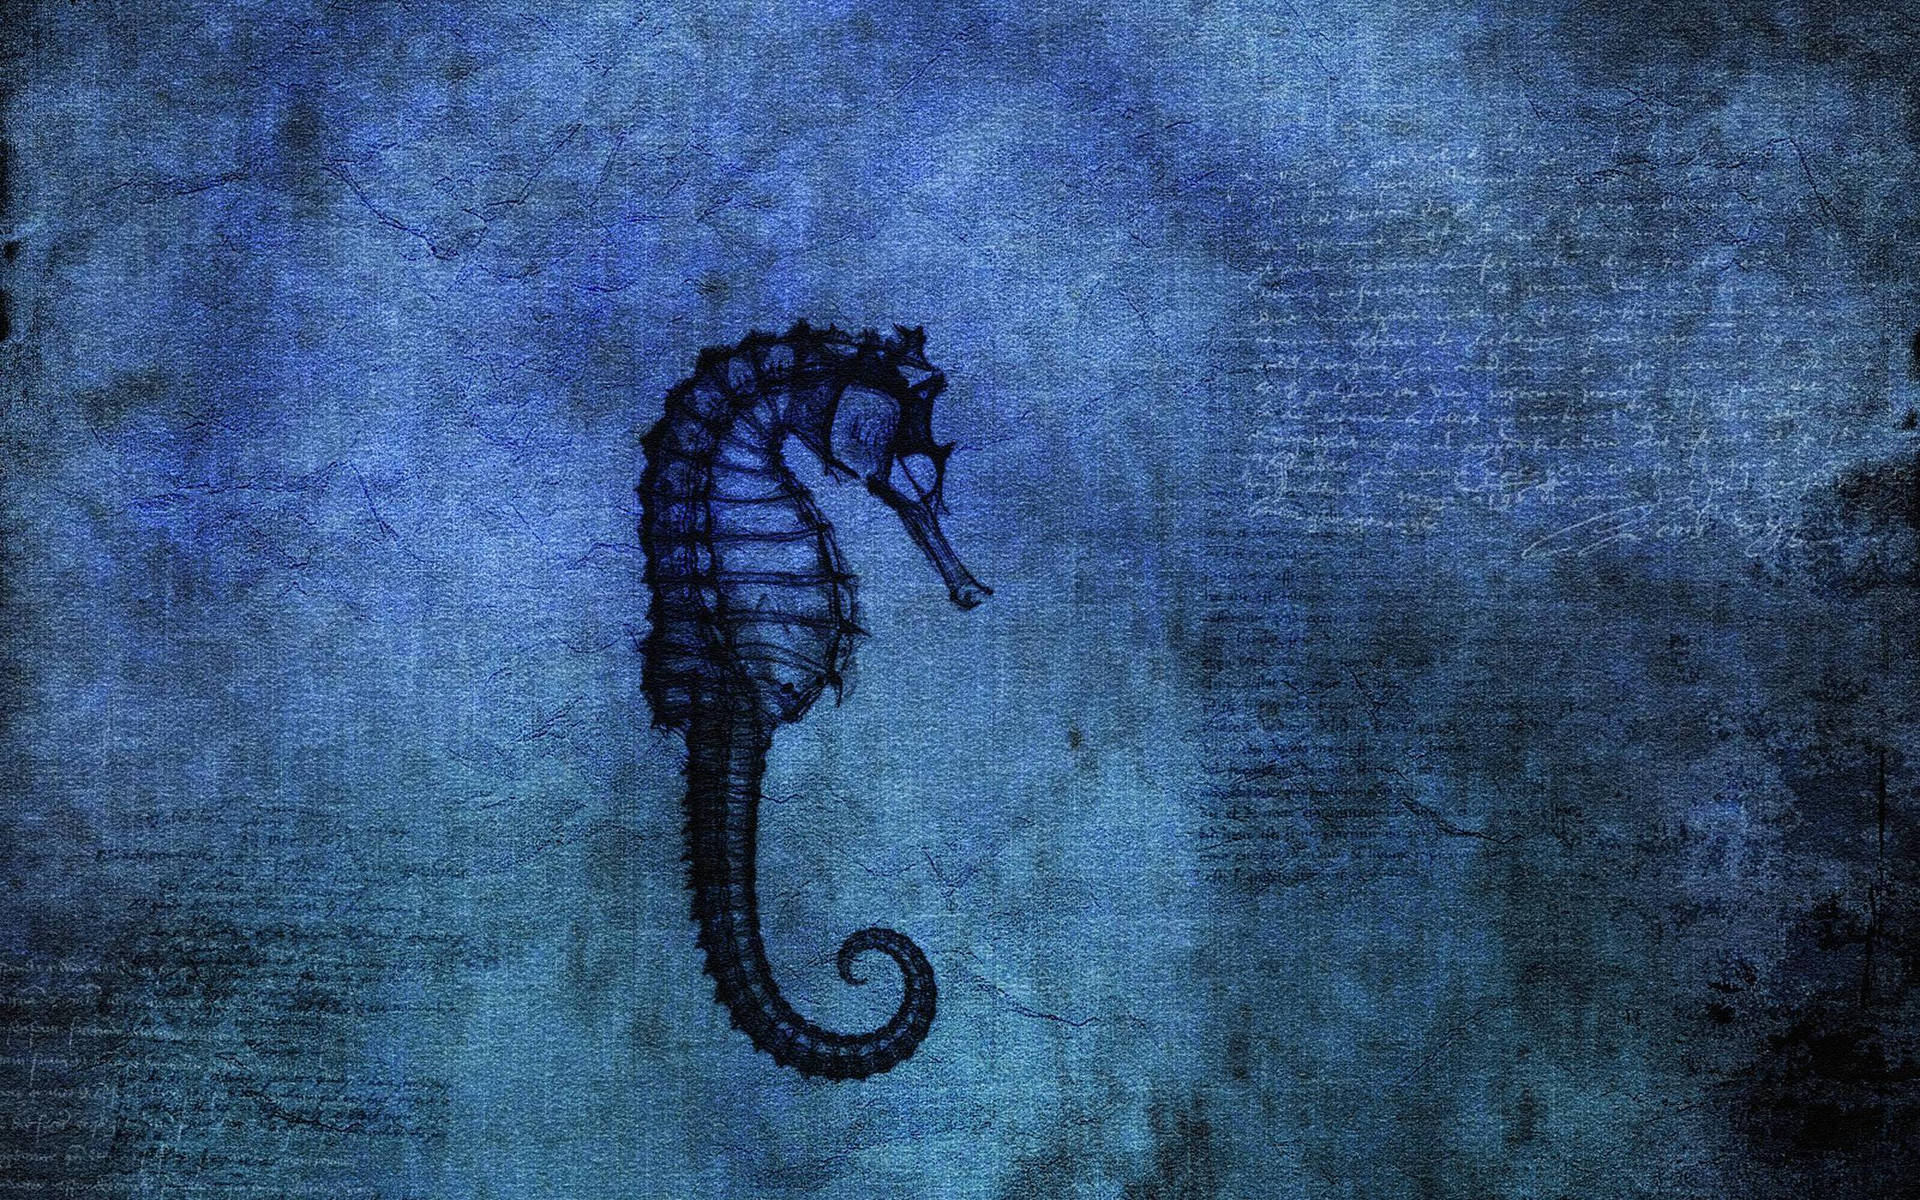 Eerie Seahorse Illustration